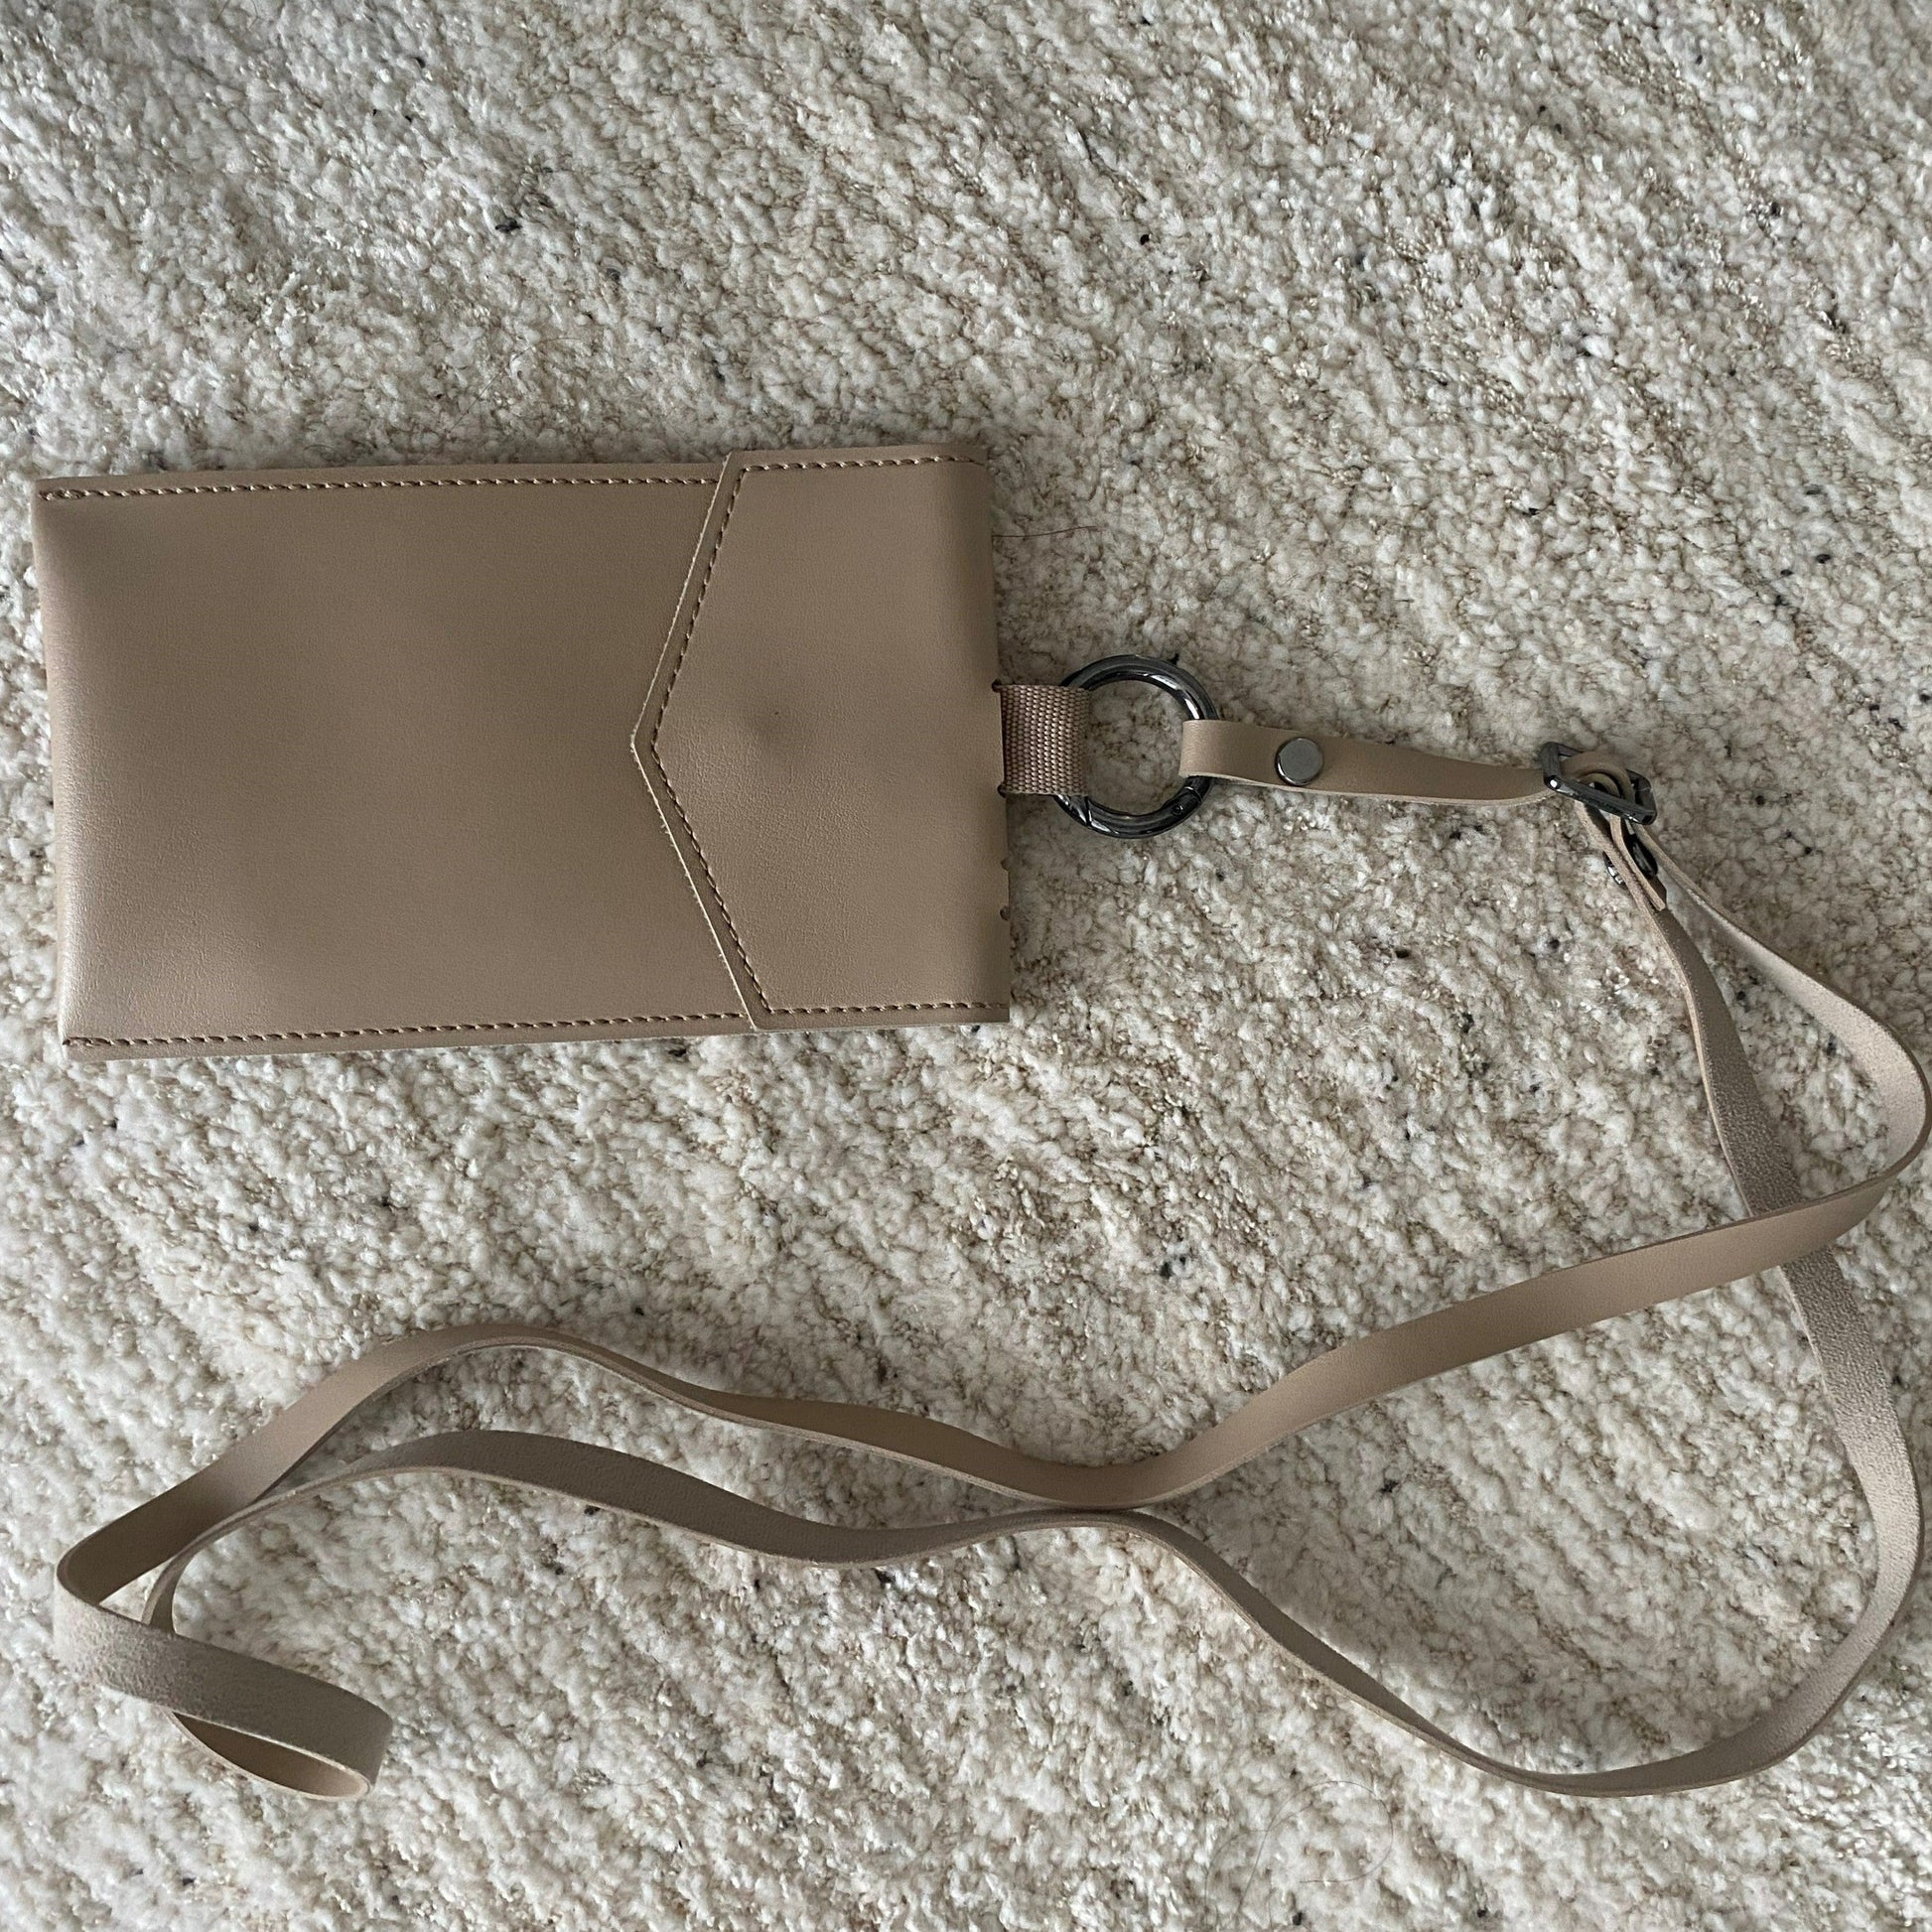 Marketplace - Phone cover - Premium Handbags, Wallets & Cases from L&E Studio